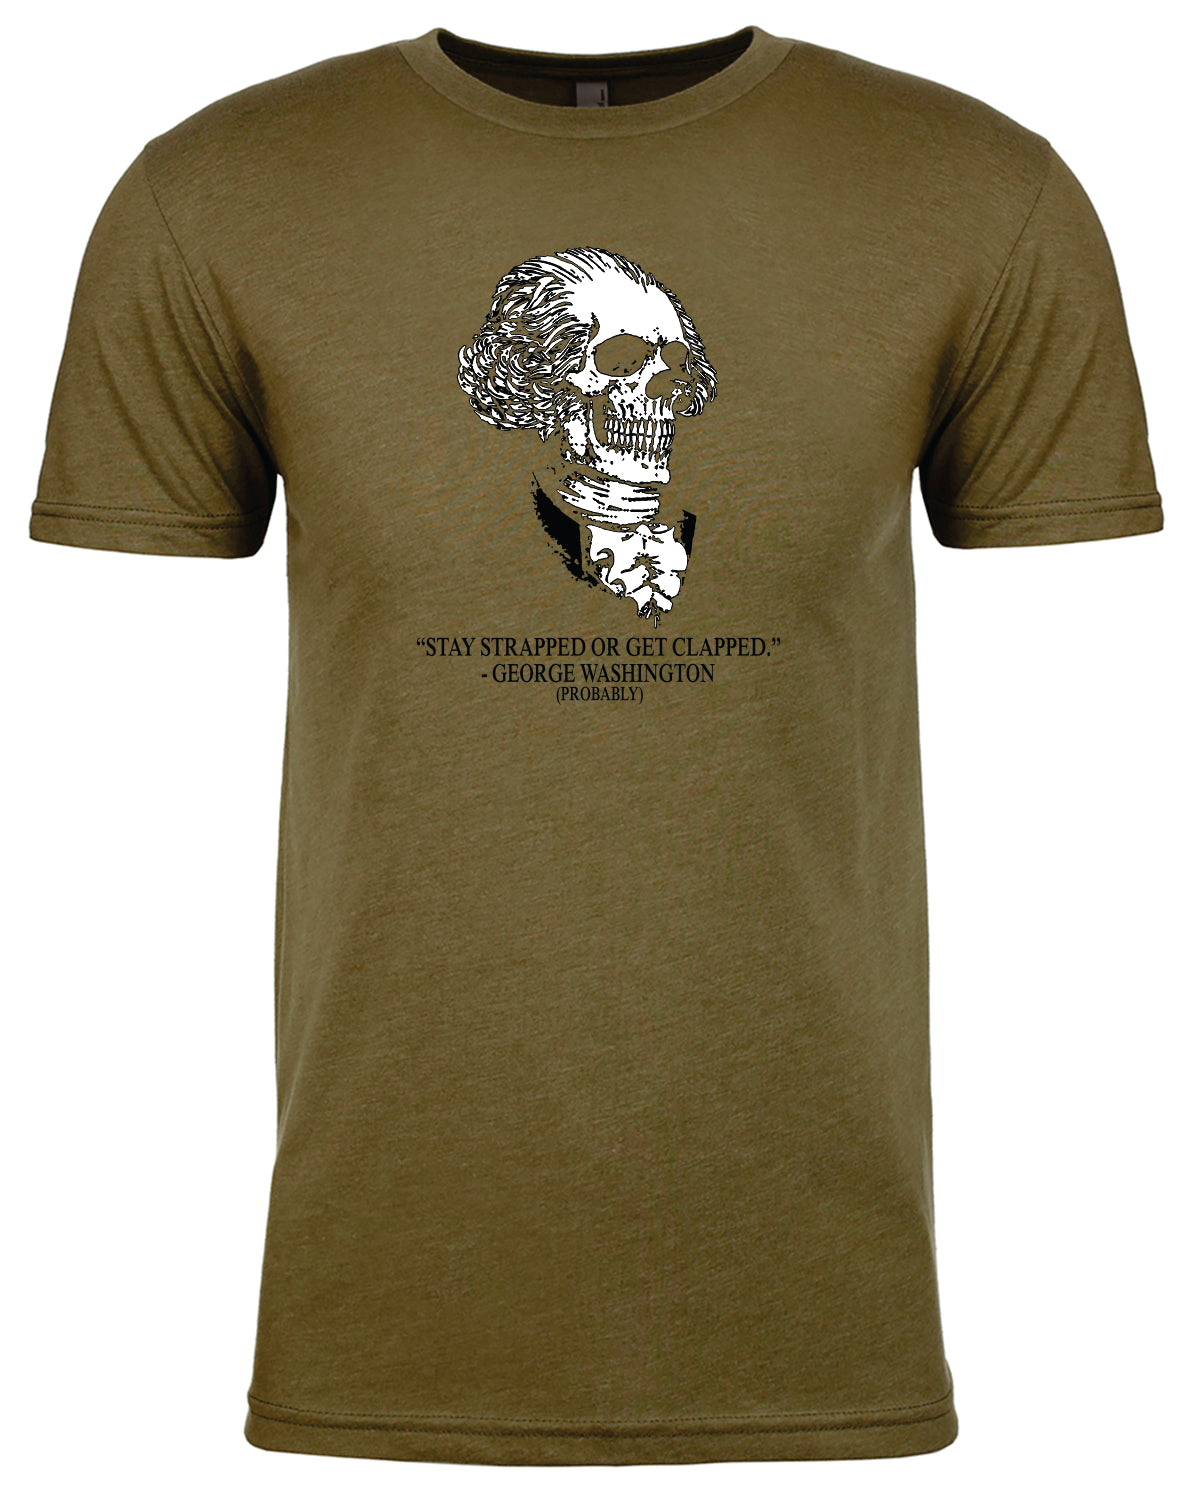 Clapped George Washington T-shirt